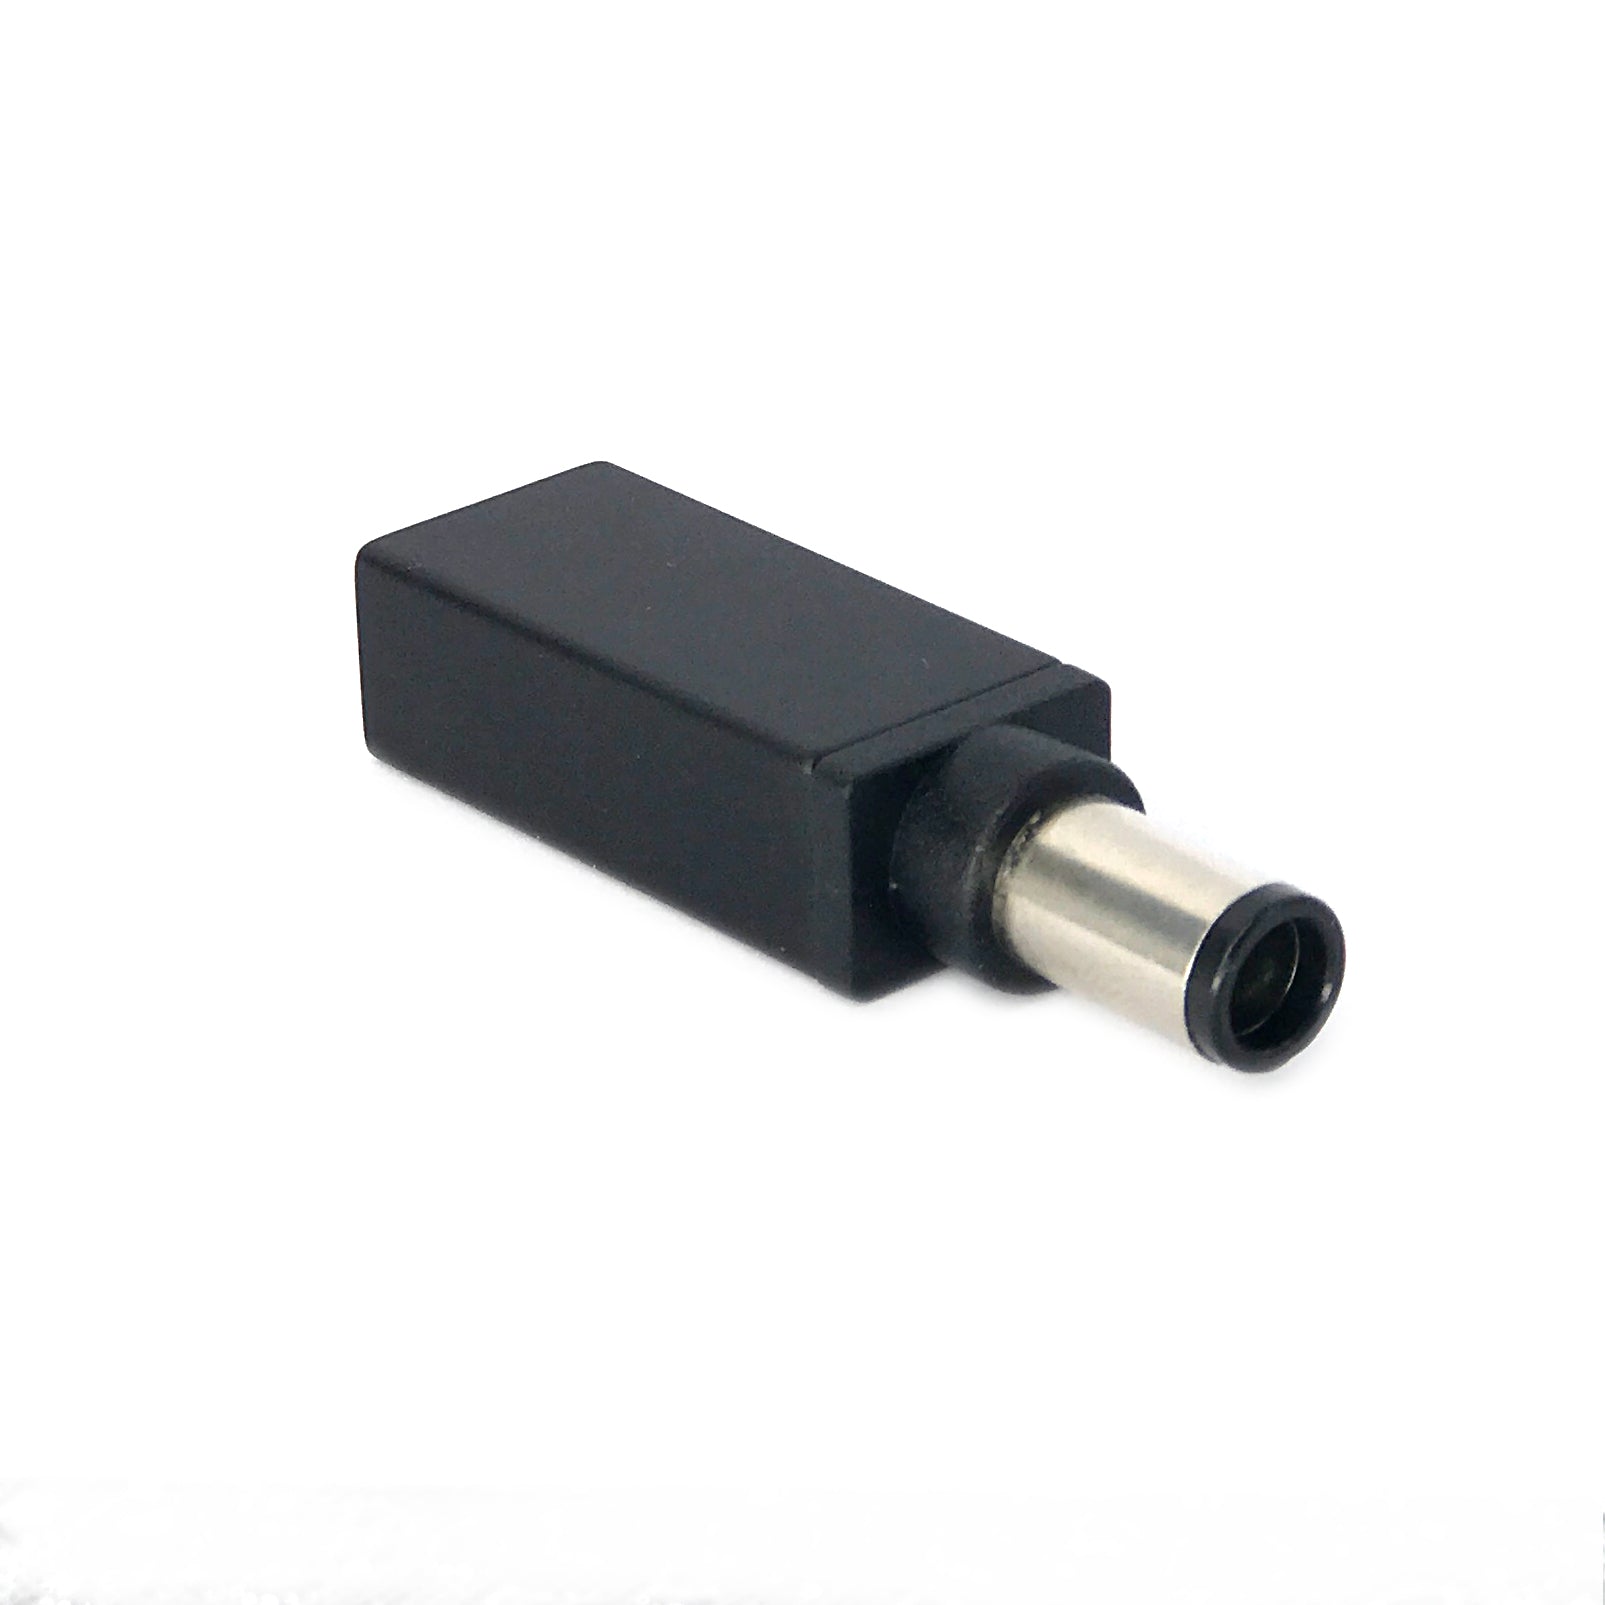 Adaptateur USB-C vers CC HP Tip C 7,4 x 5,0 x 0,6 mm